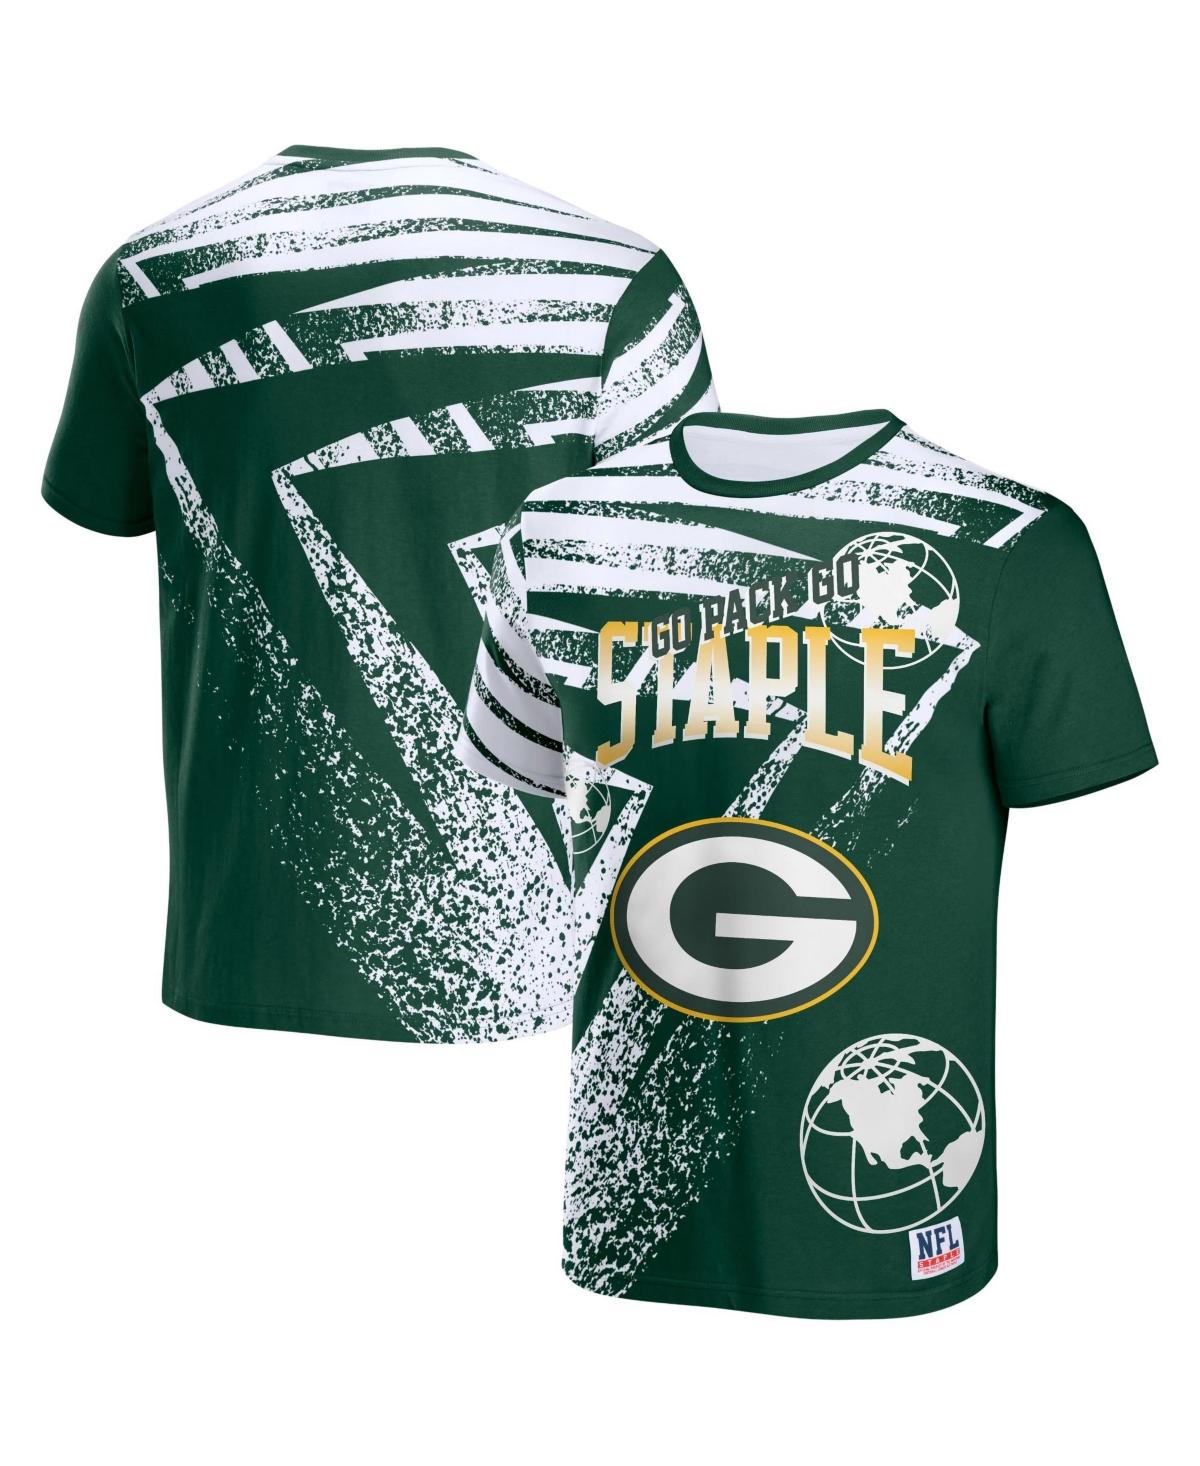 Nfl Properties Men's Nfl X Staple Hunter Green Green Bay Packers Team Slogan All Over Print Short Sleeve T-shirt